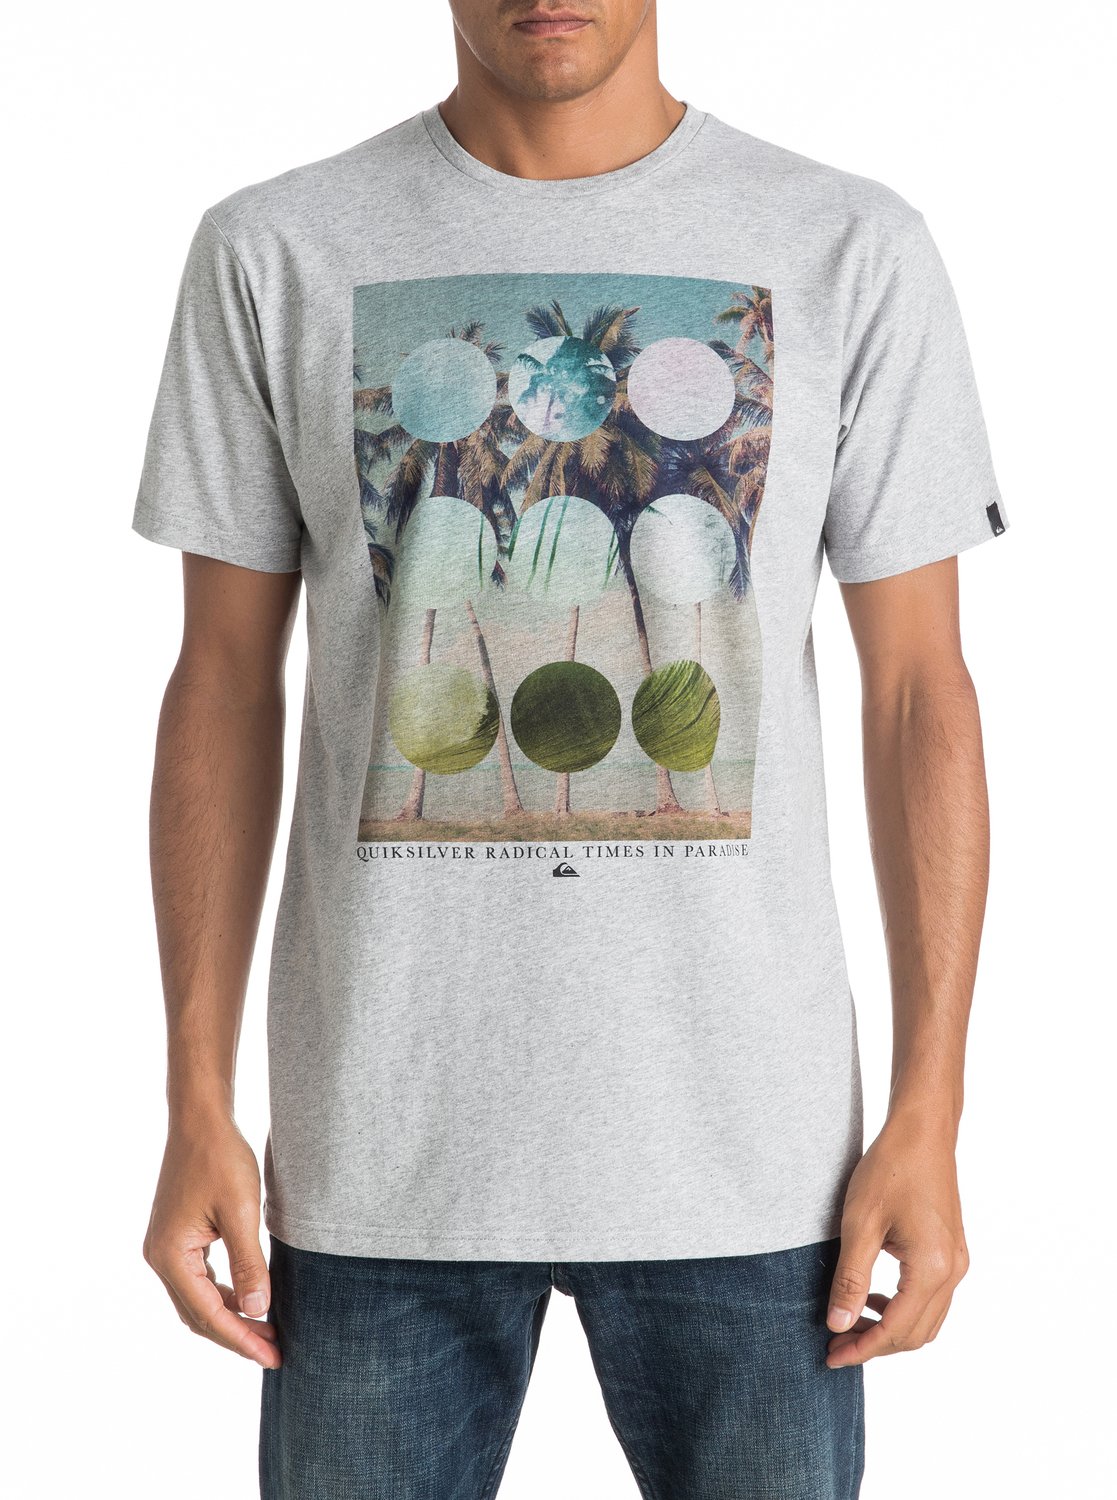 Classic Lost Paradise - Tee-Shirt pour Homme - Quiksilver